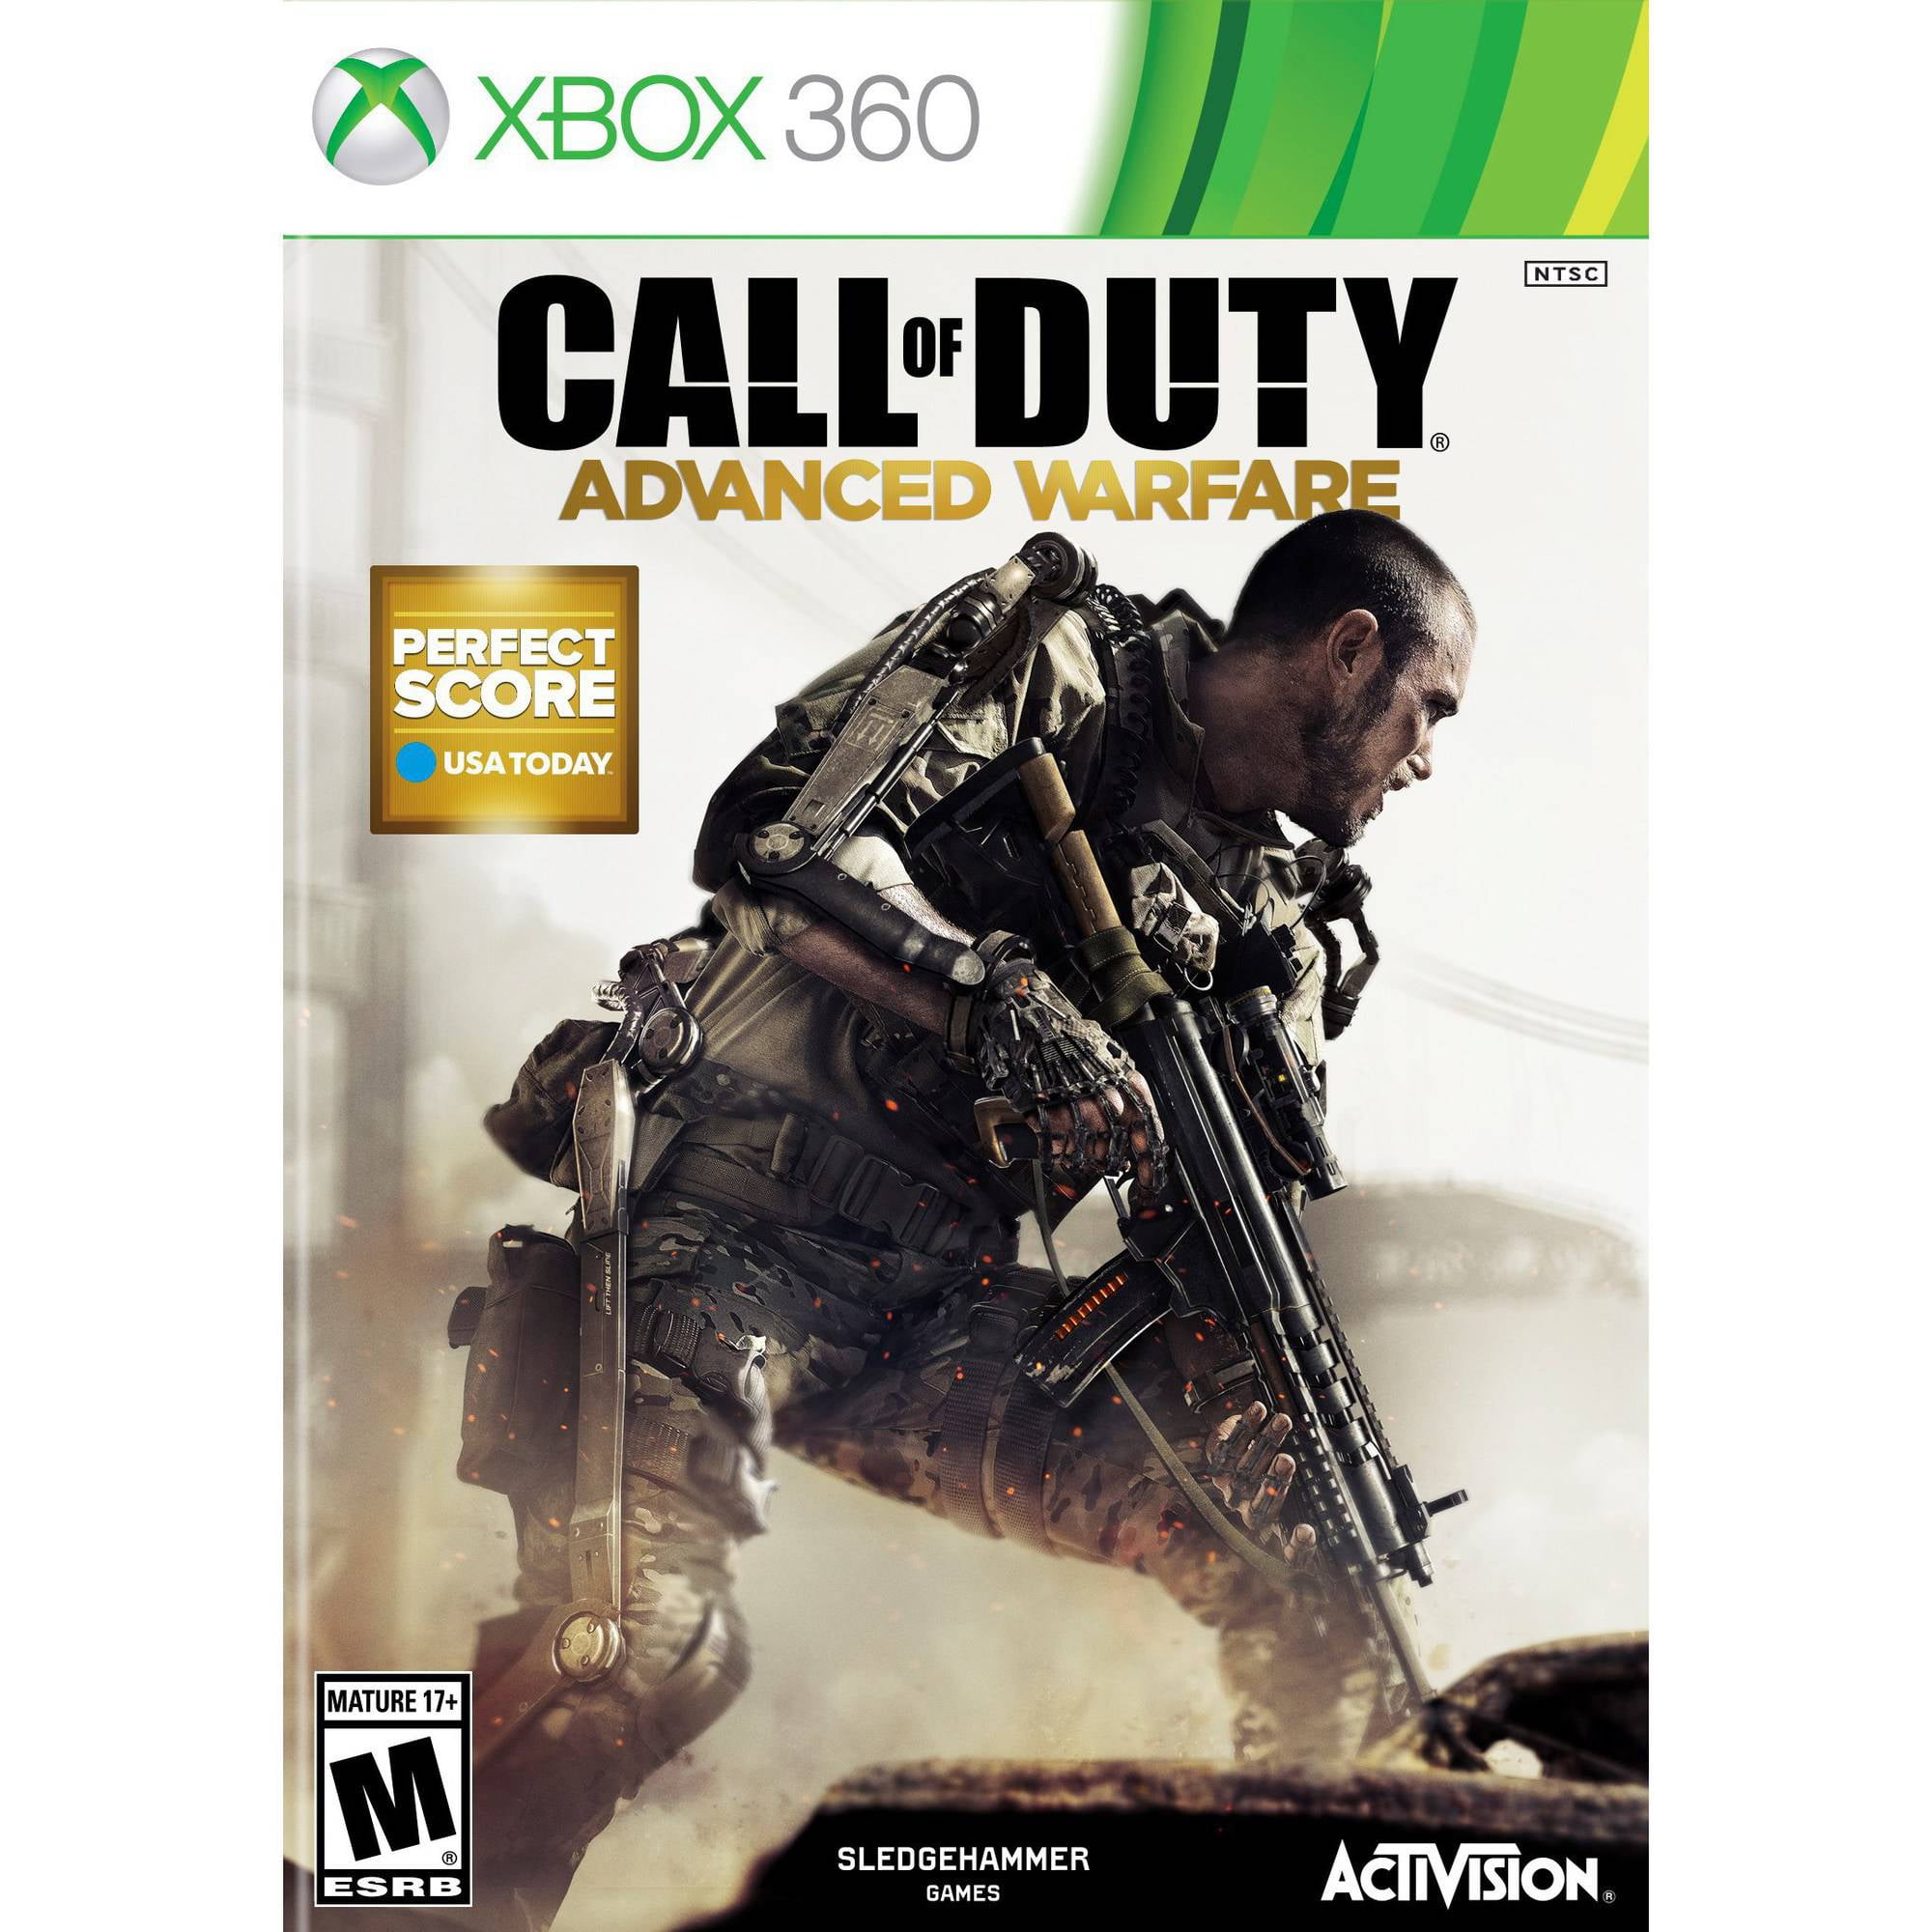 Call of Duty: Advanced Warfare Day Zero Edition, Activision, Xbox 360,  [Physical] 